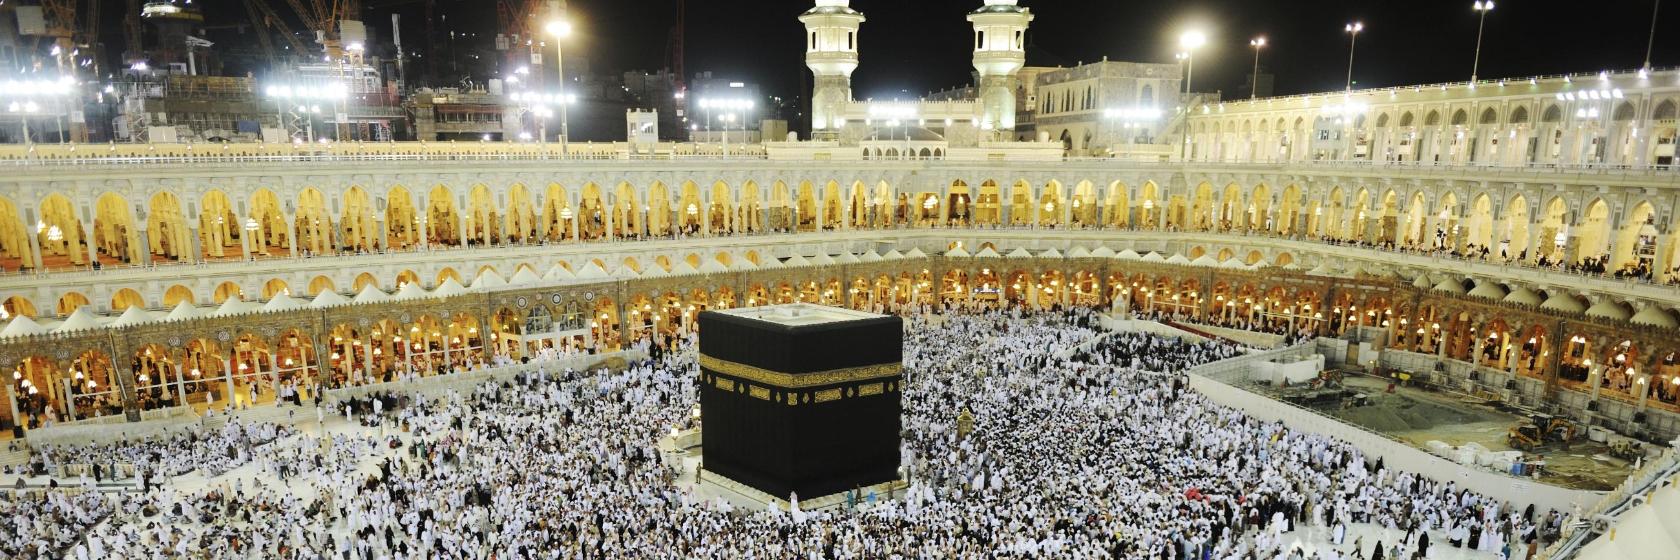 The 10 Best Hotels Near Masjid Al Haram In Mecca Saudi Arabia